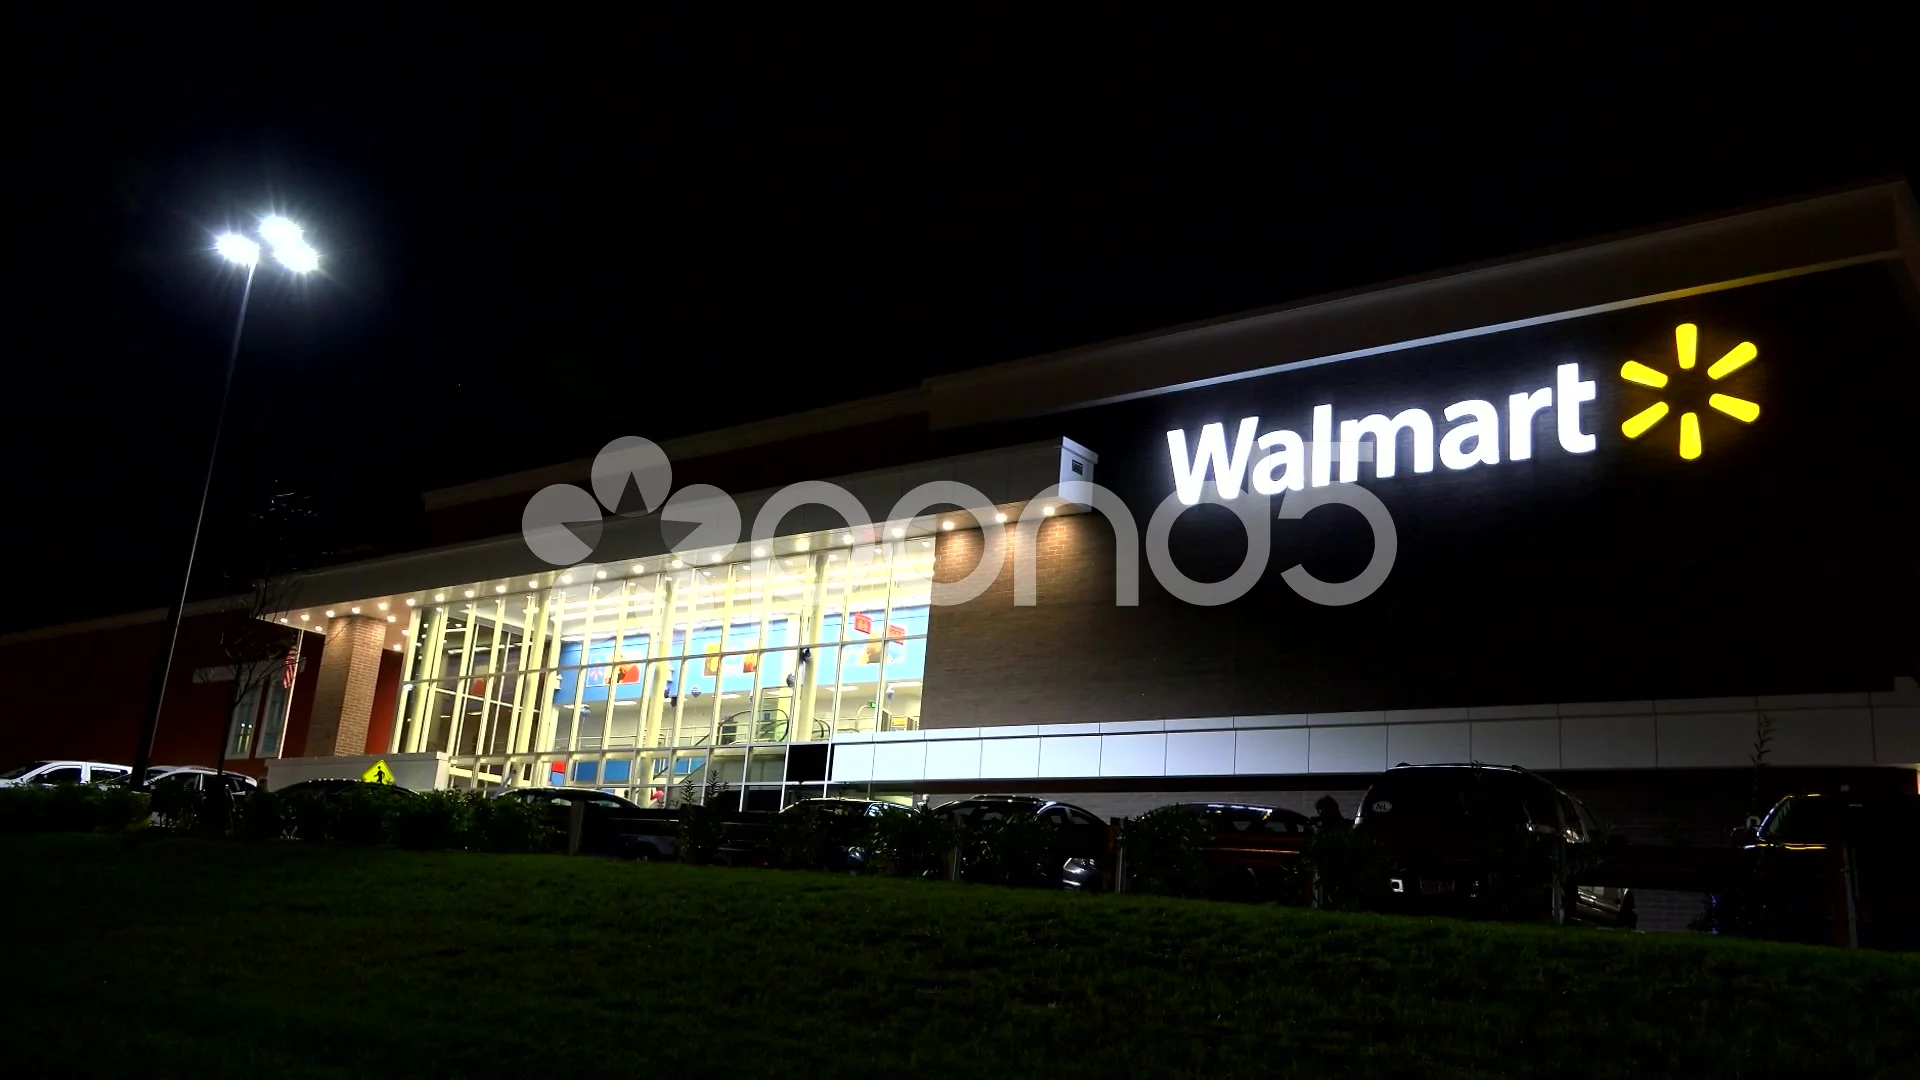 Walmart Supercenter Saugus Nov 23 at PM: @ Come visit Elsa and Ana